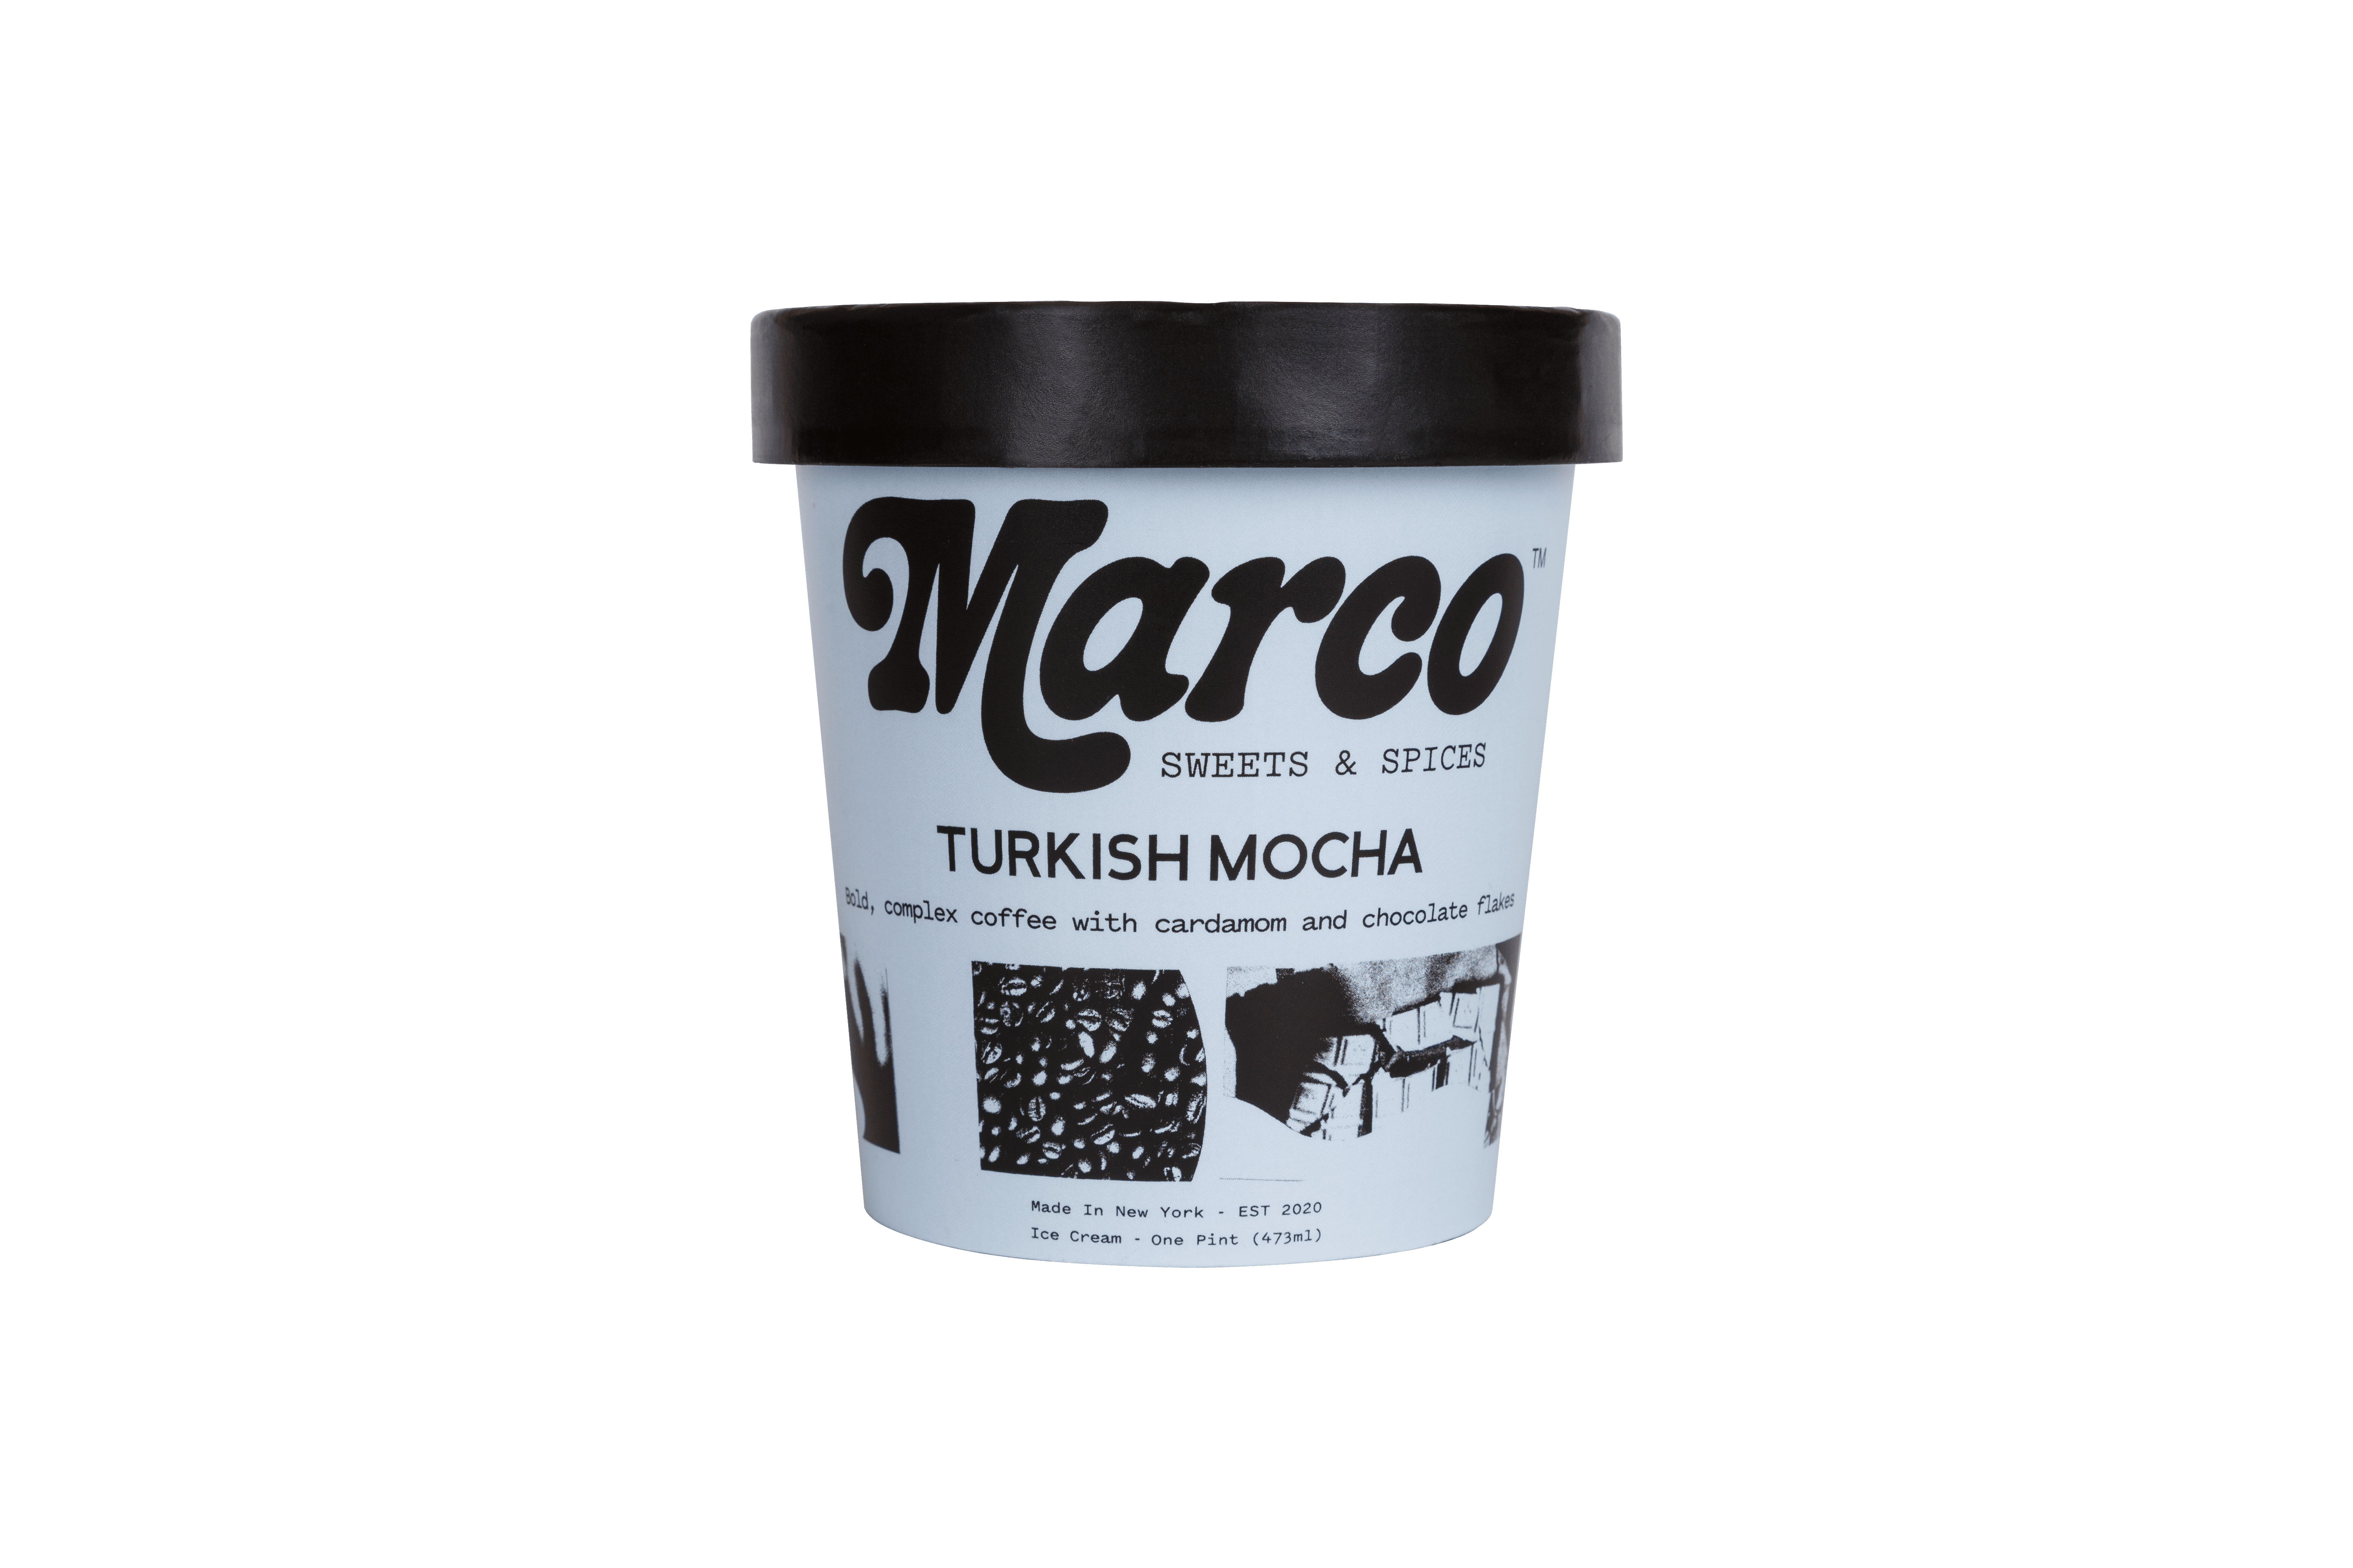 Marco Sweets Turkish Mocha Ice Cream Pint 8 units per case 16.0 oz